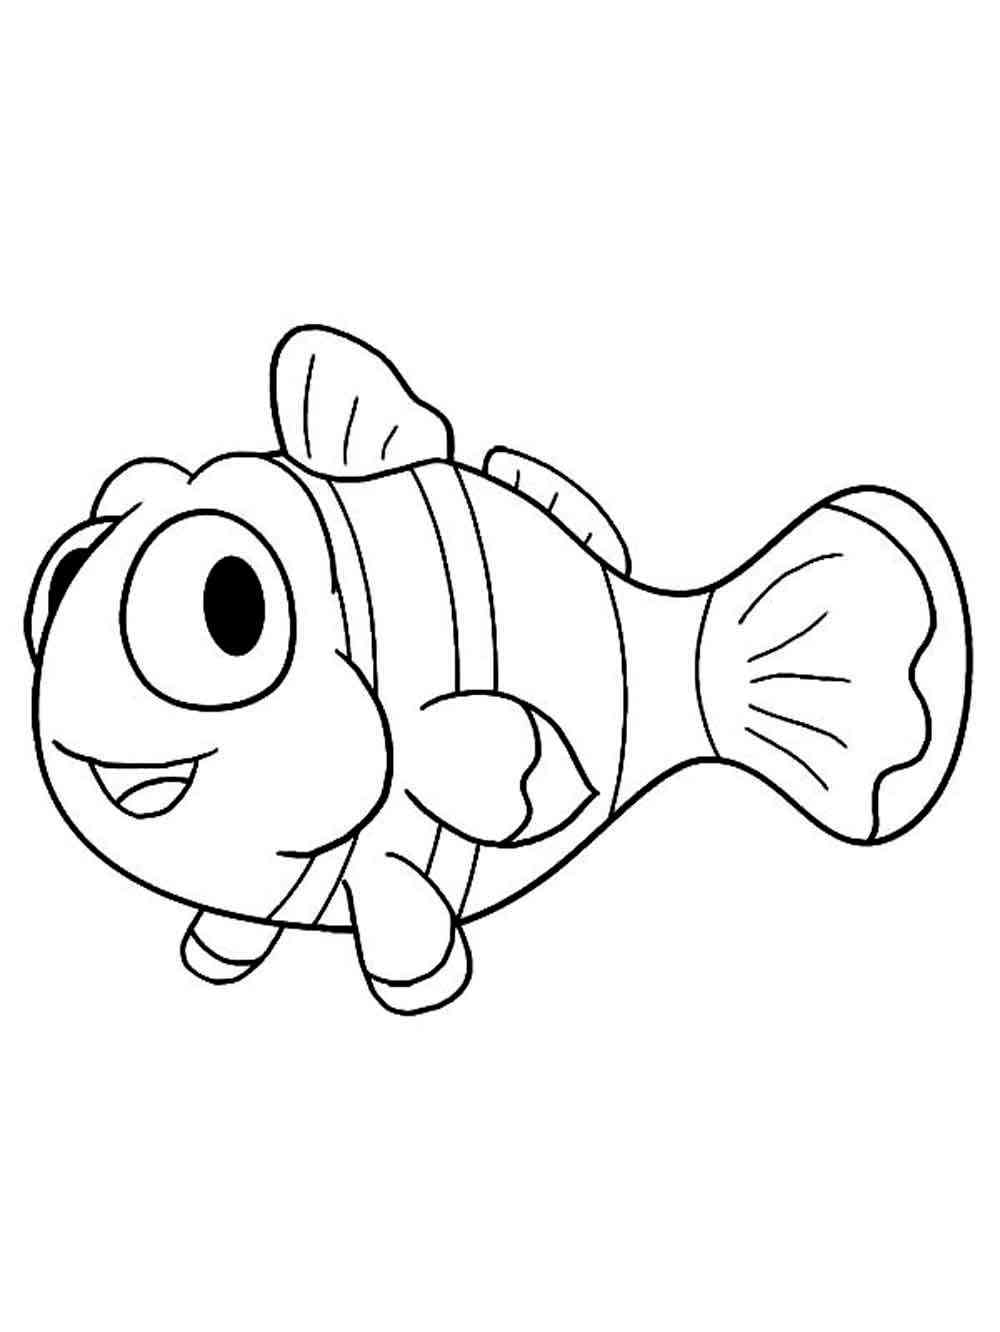 Cartoon Clownfish coloring page